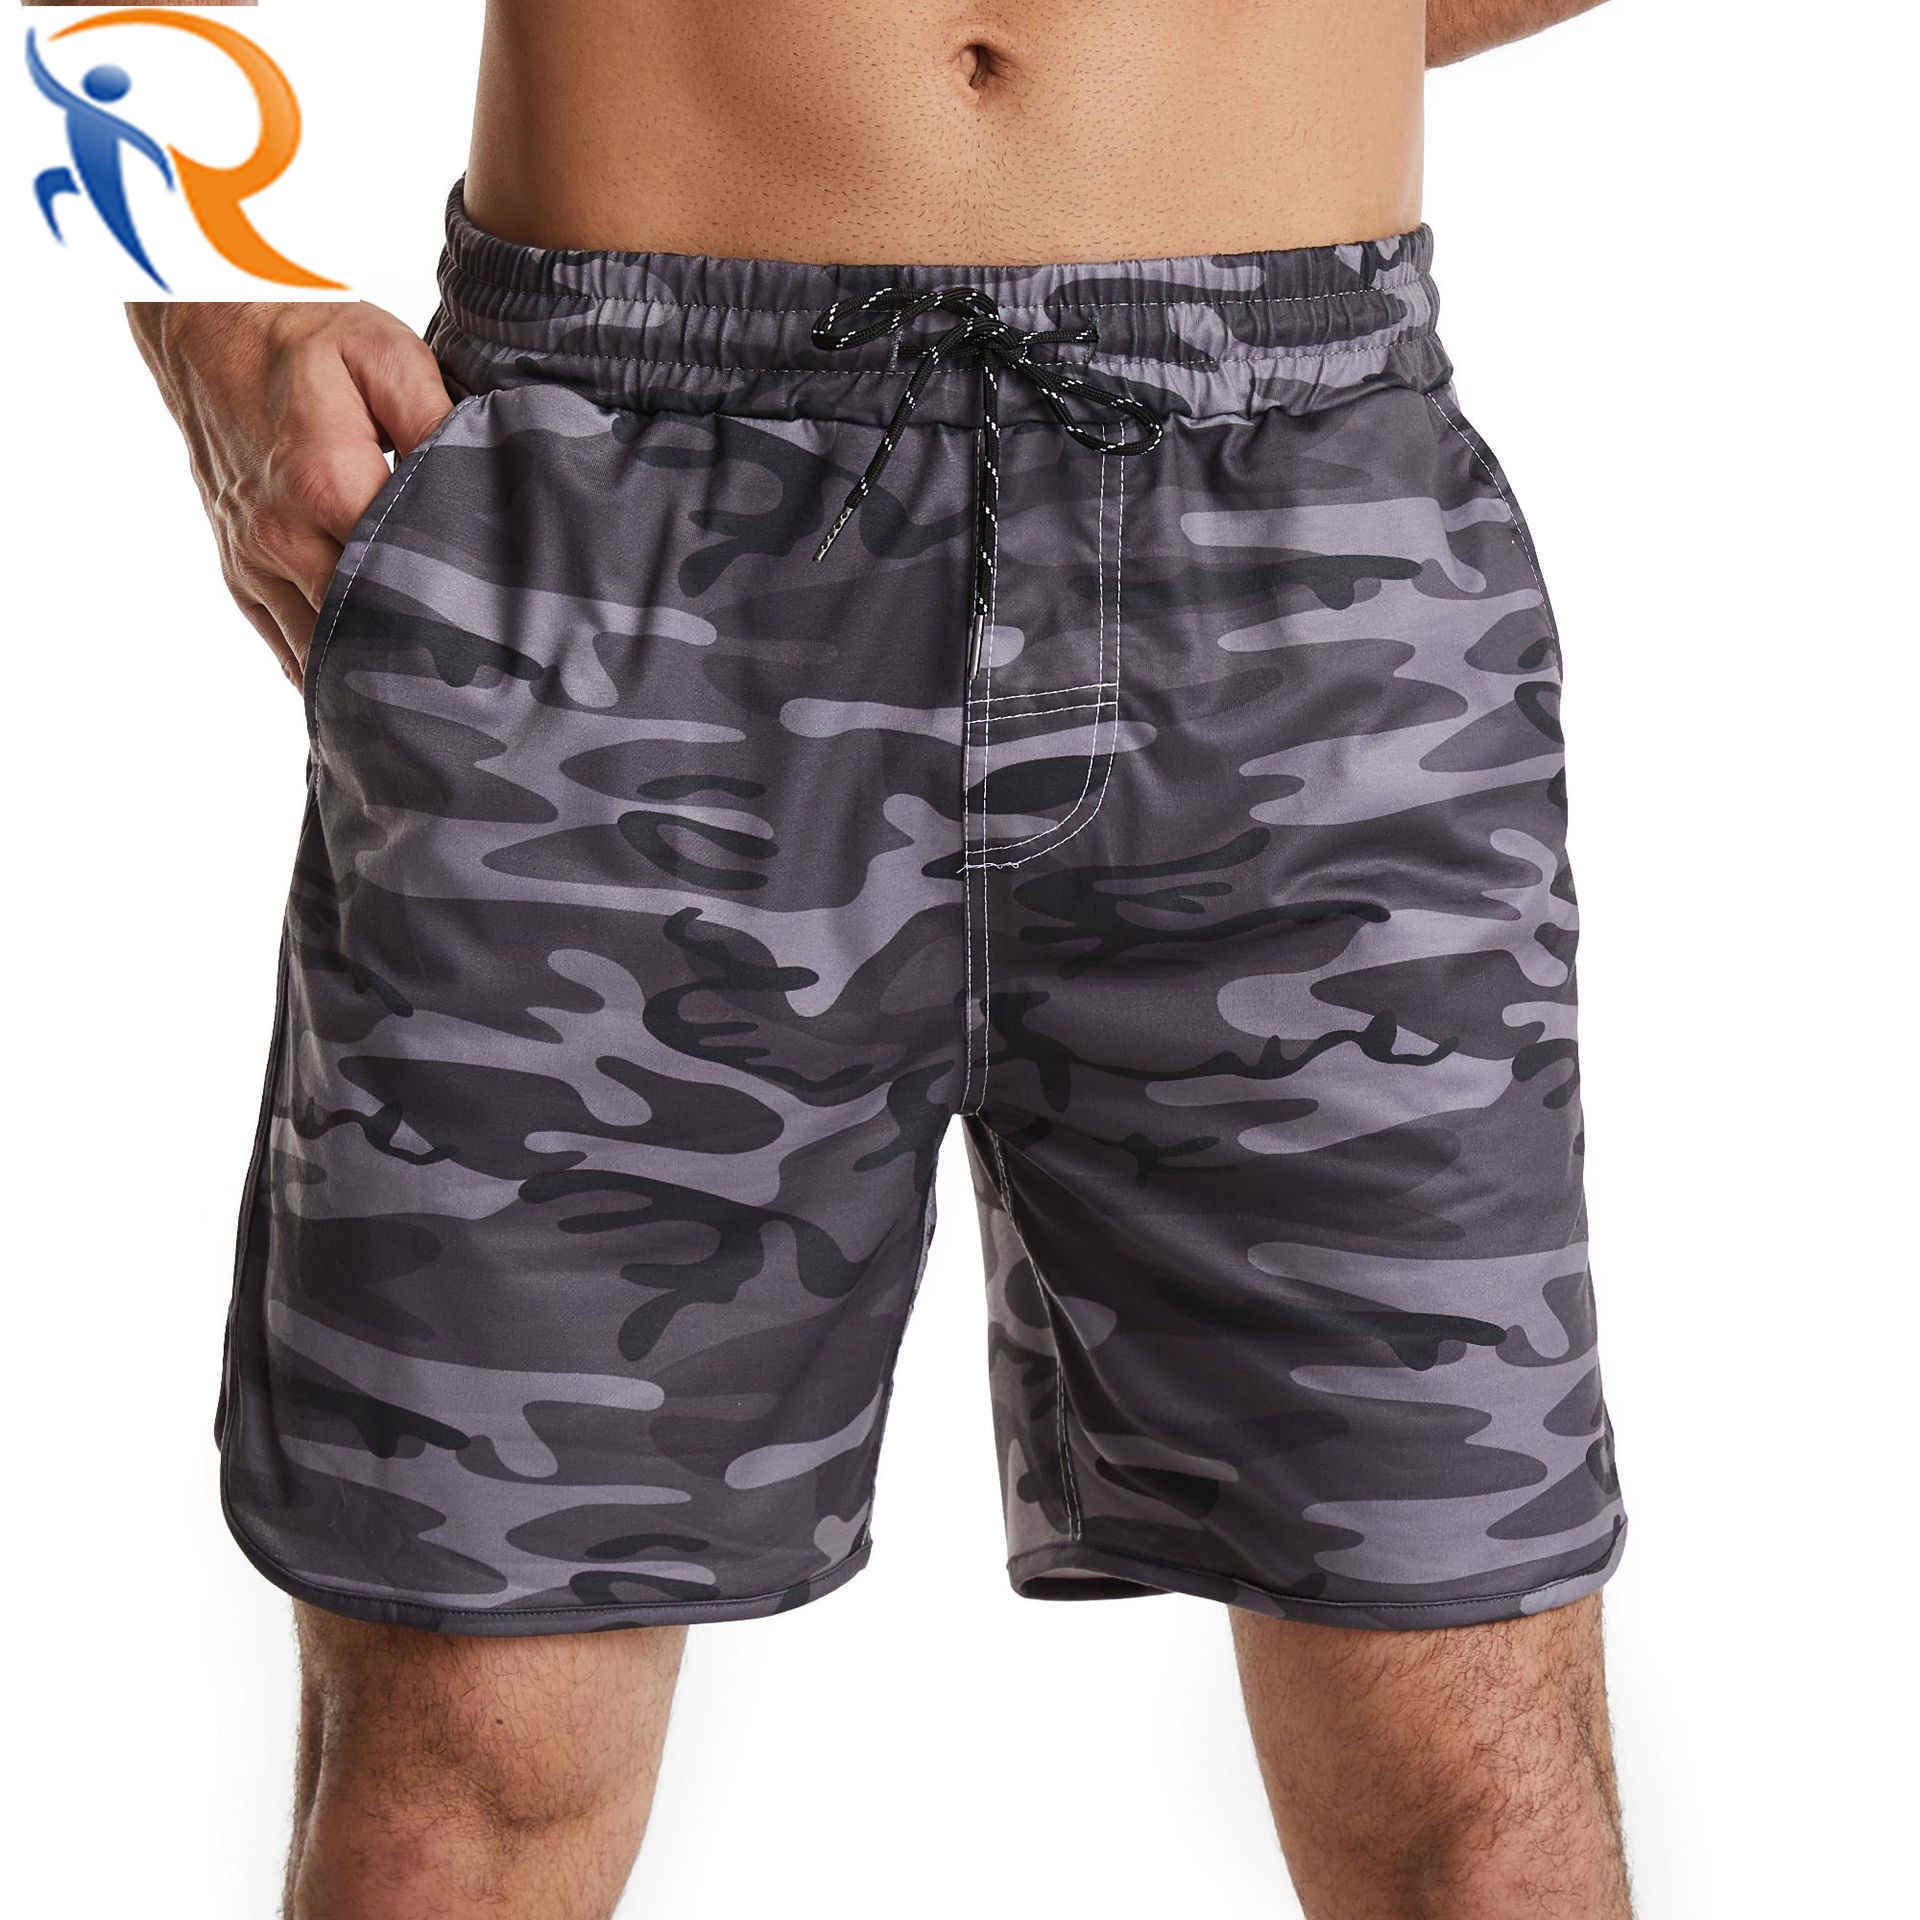 Customized Camouflage Sublimation Drawstring Sports Short for Men Beach Short